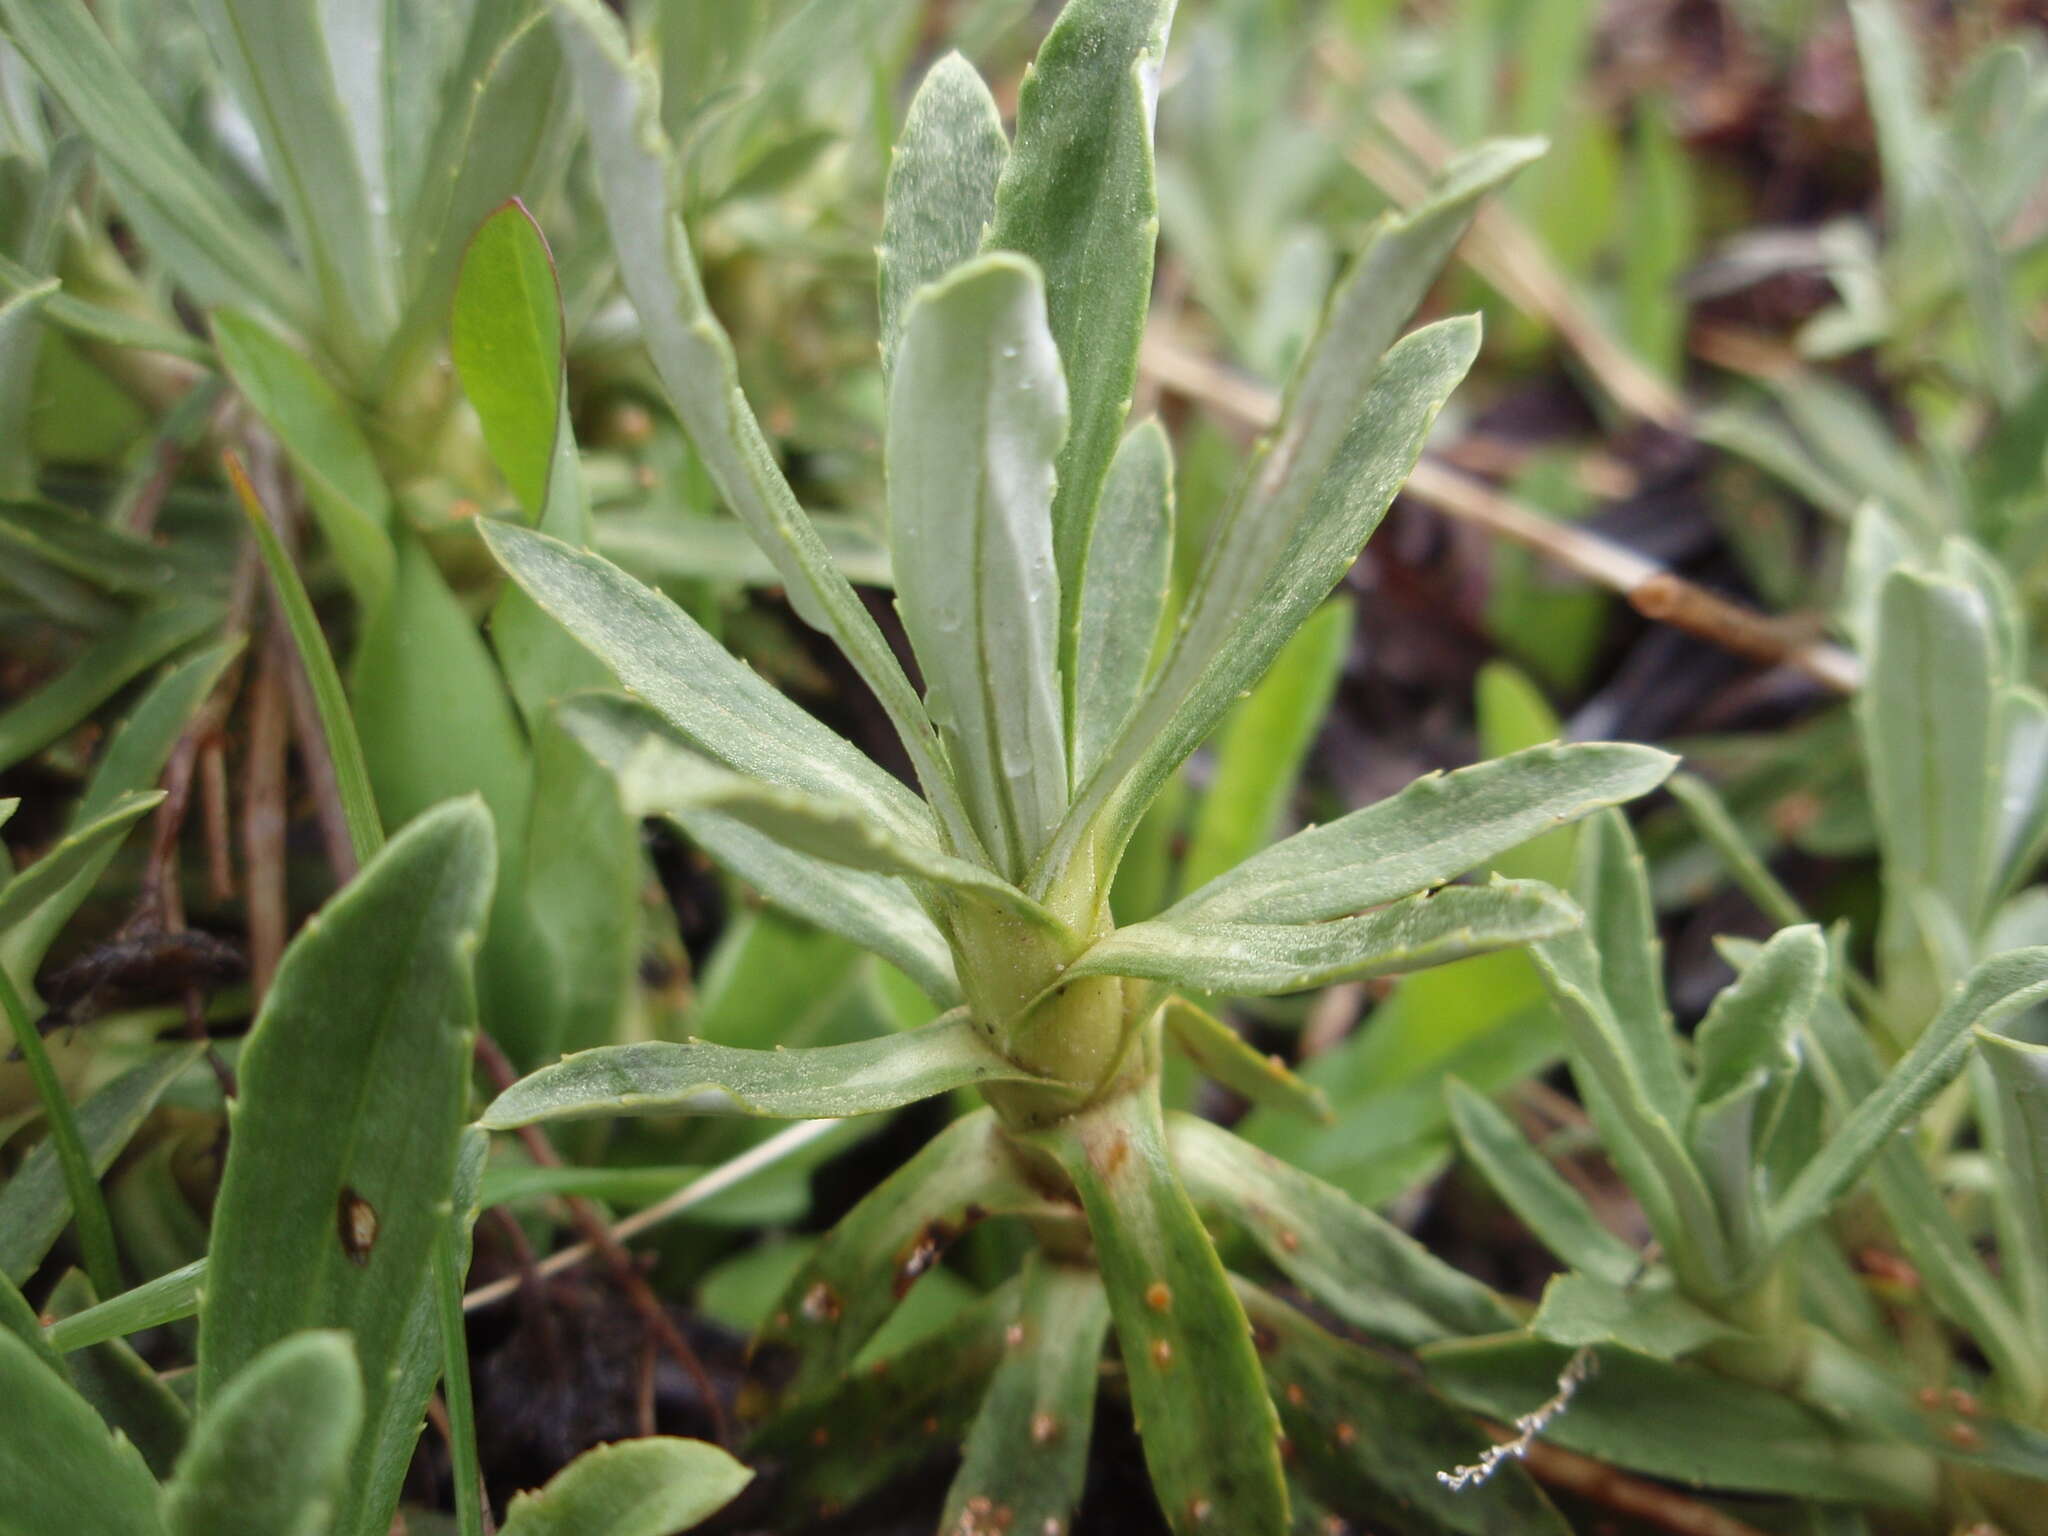 Image of Celmisia angustifolia Cockayne